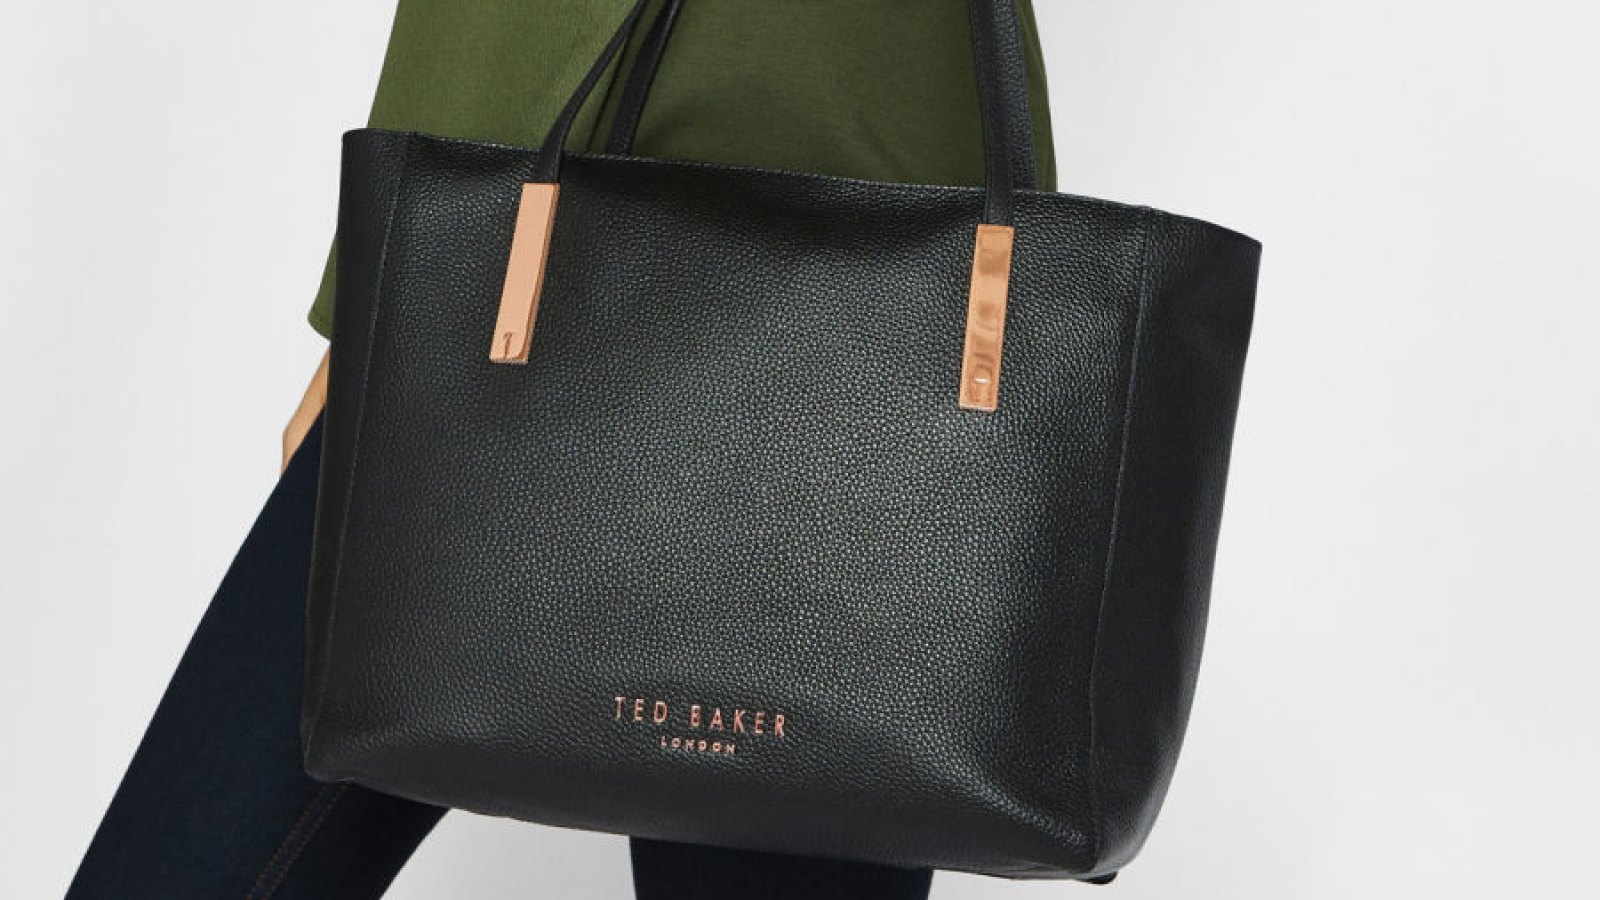 Shop Ted Baker London Bags on Sale: Tote, Satchel, Cross-Body